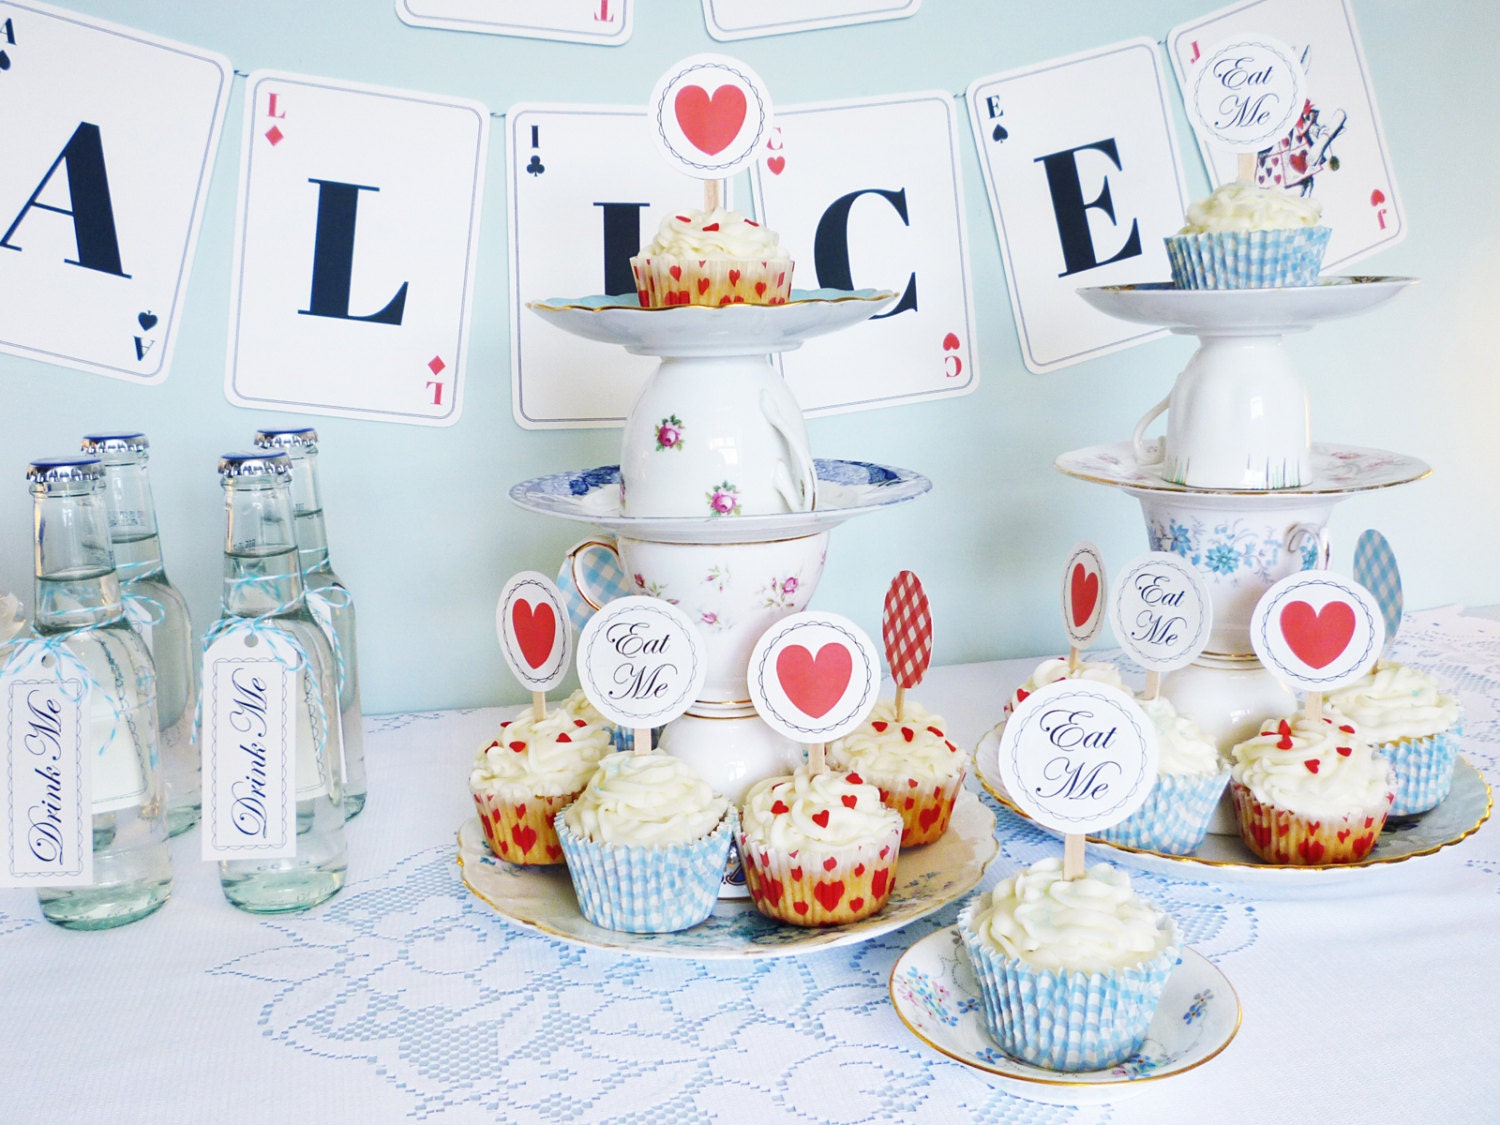 Alice in Wonderland Party Decorations & Games Printable Kit -  Norway